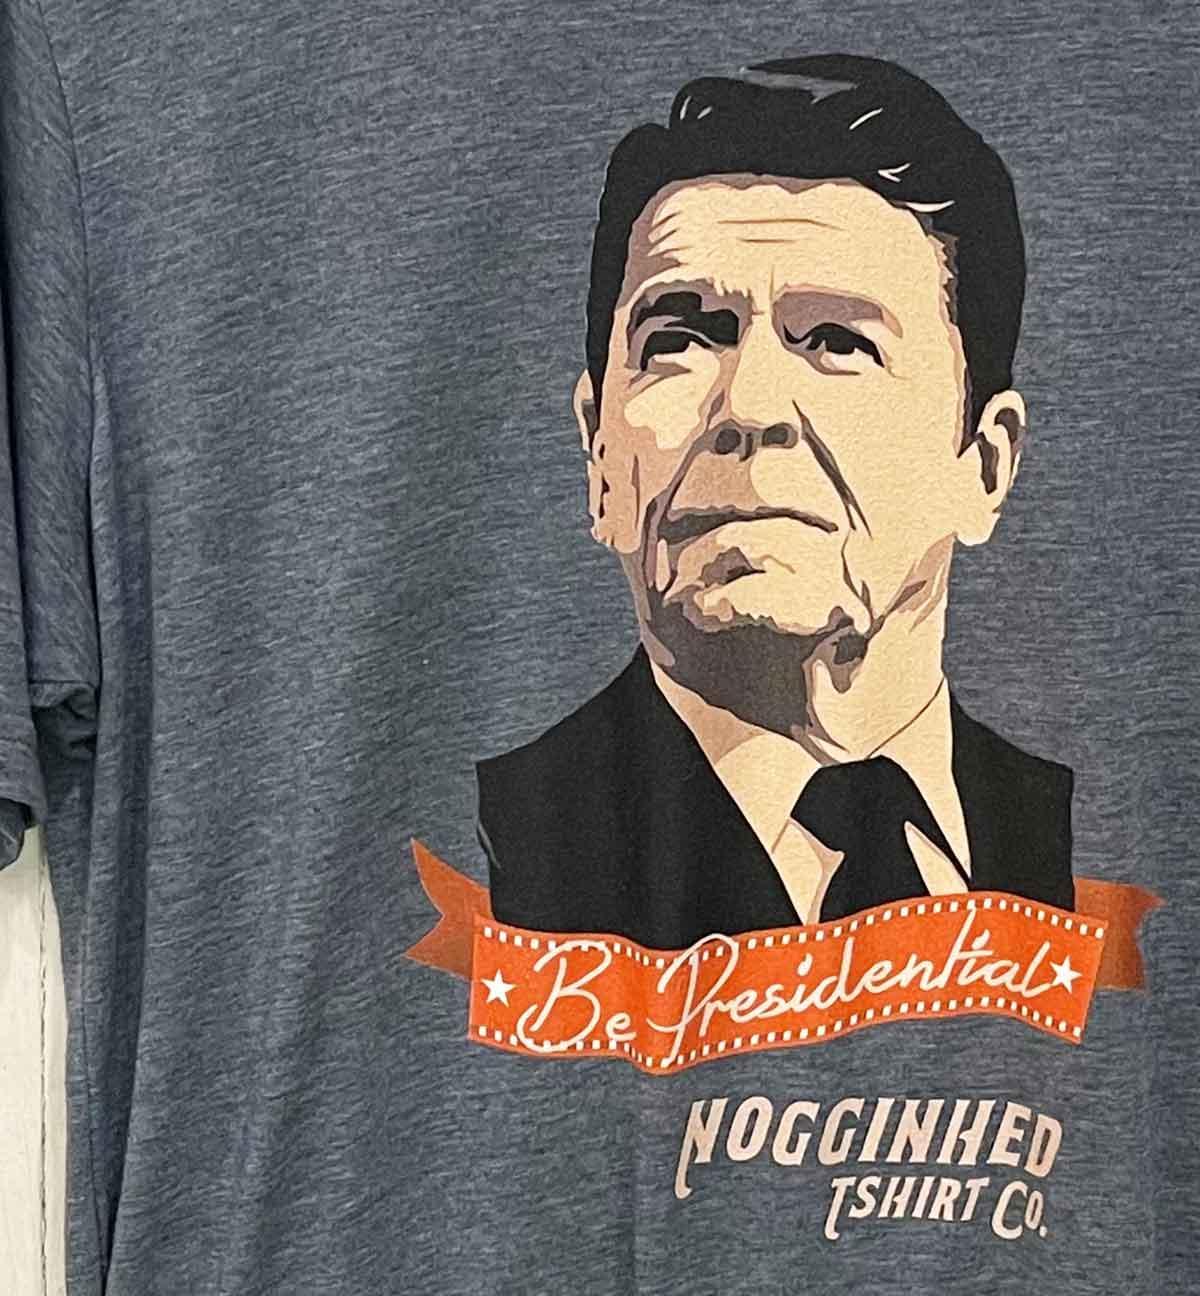 Be Presidential Reagan Tshirt - HOT DEAL🔥 - NOGGINHED